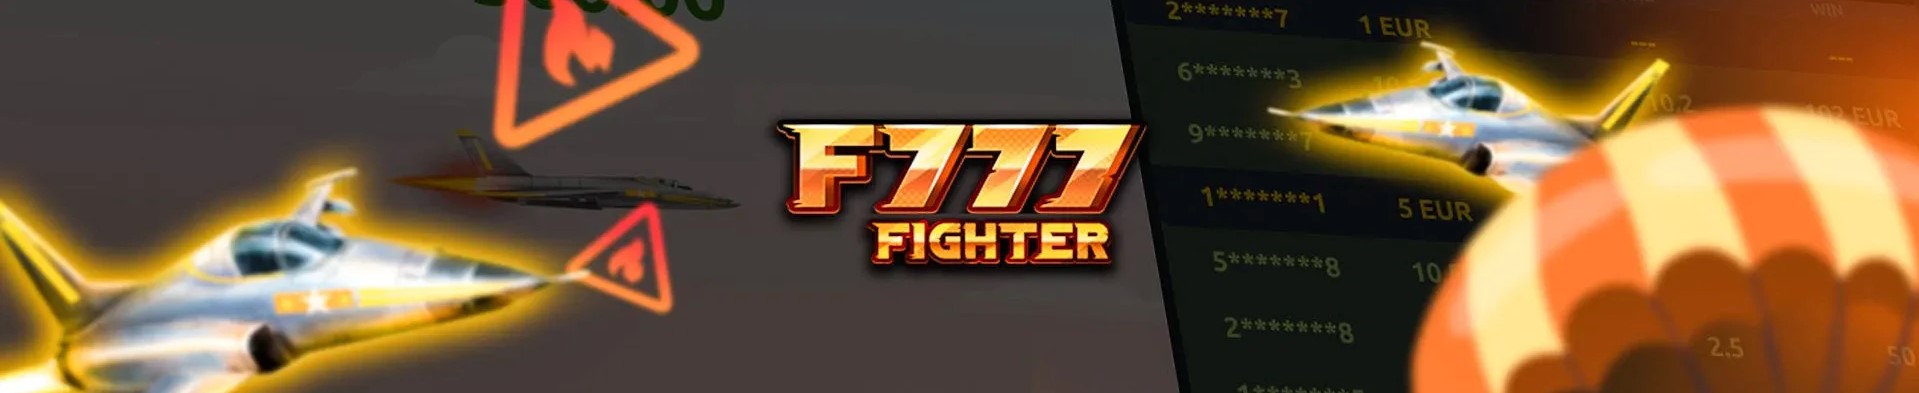 F777 fighter игра.